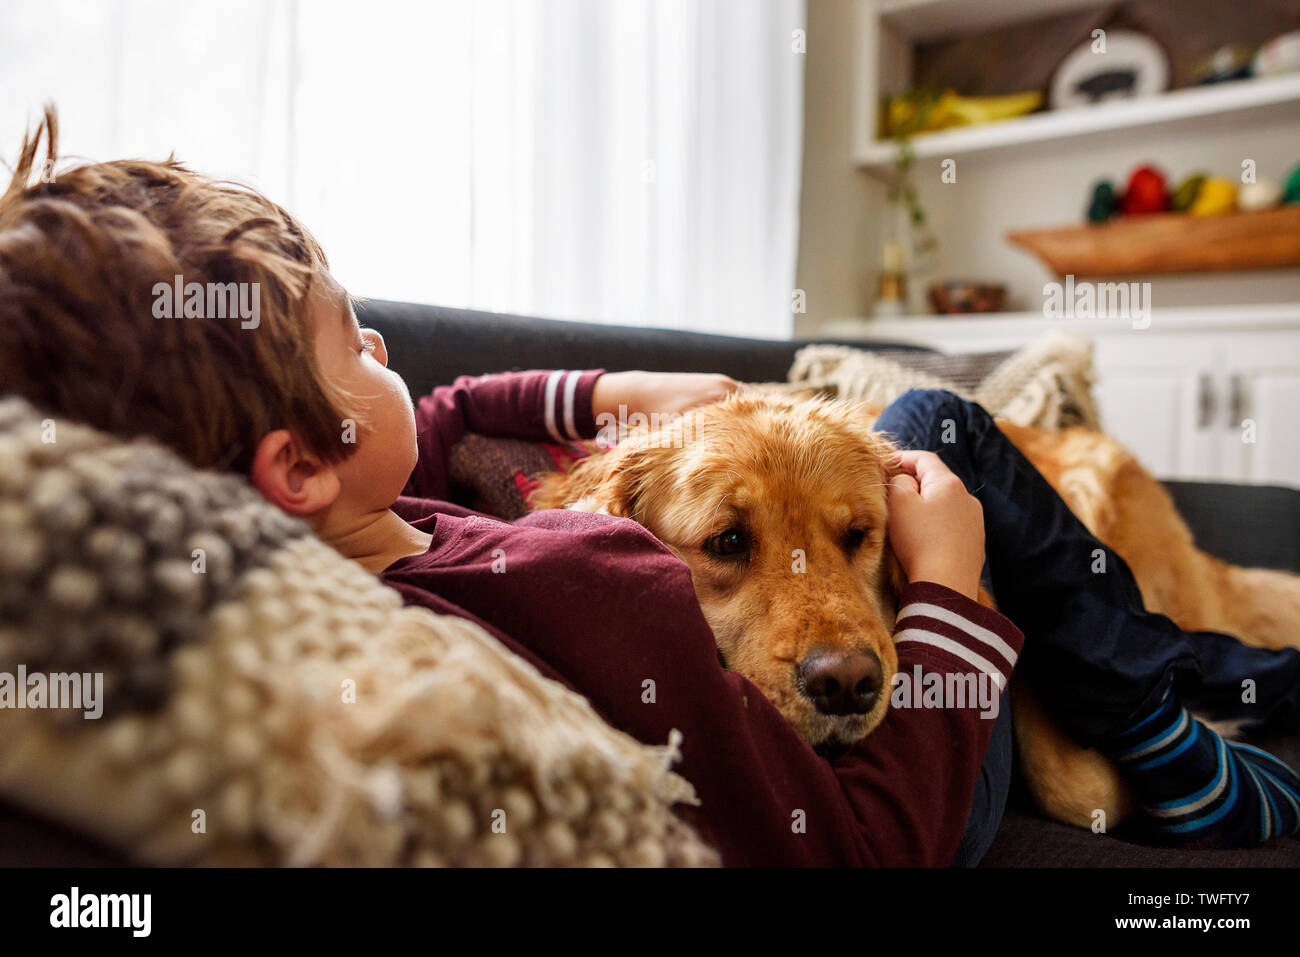 Boy lying on a couch cuddling a golden retriever dog Stock Photo